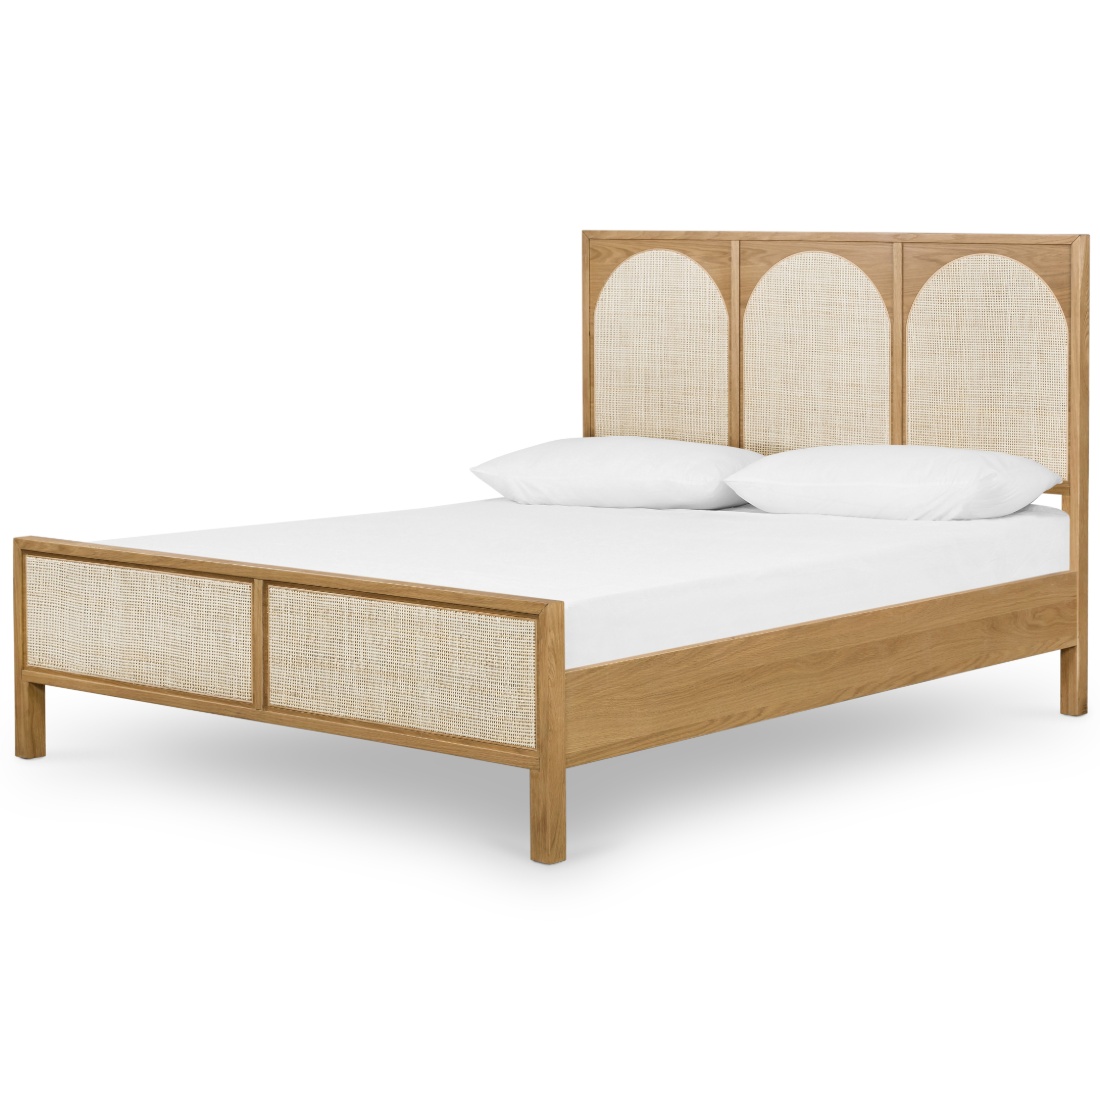 Allegra Woven Cane Queen Size Oak Wood Platform Bed | Zin Home